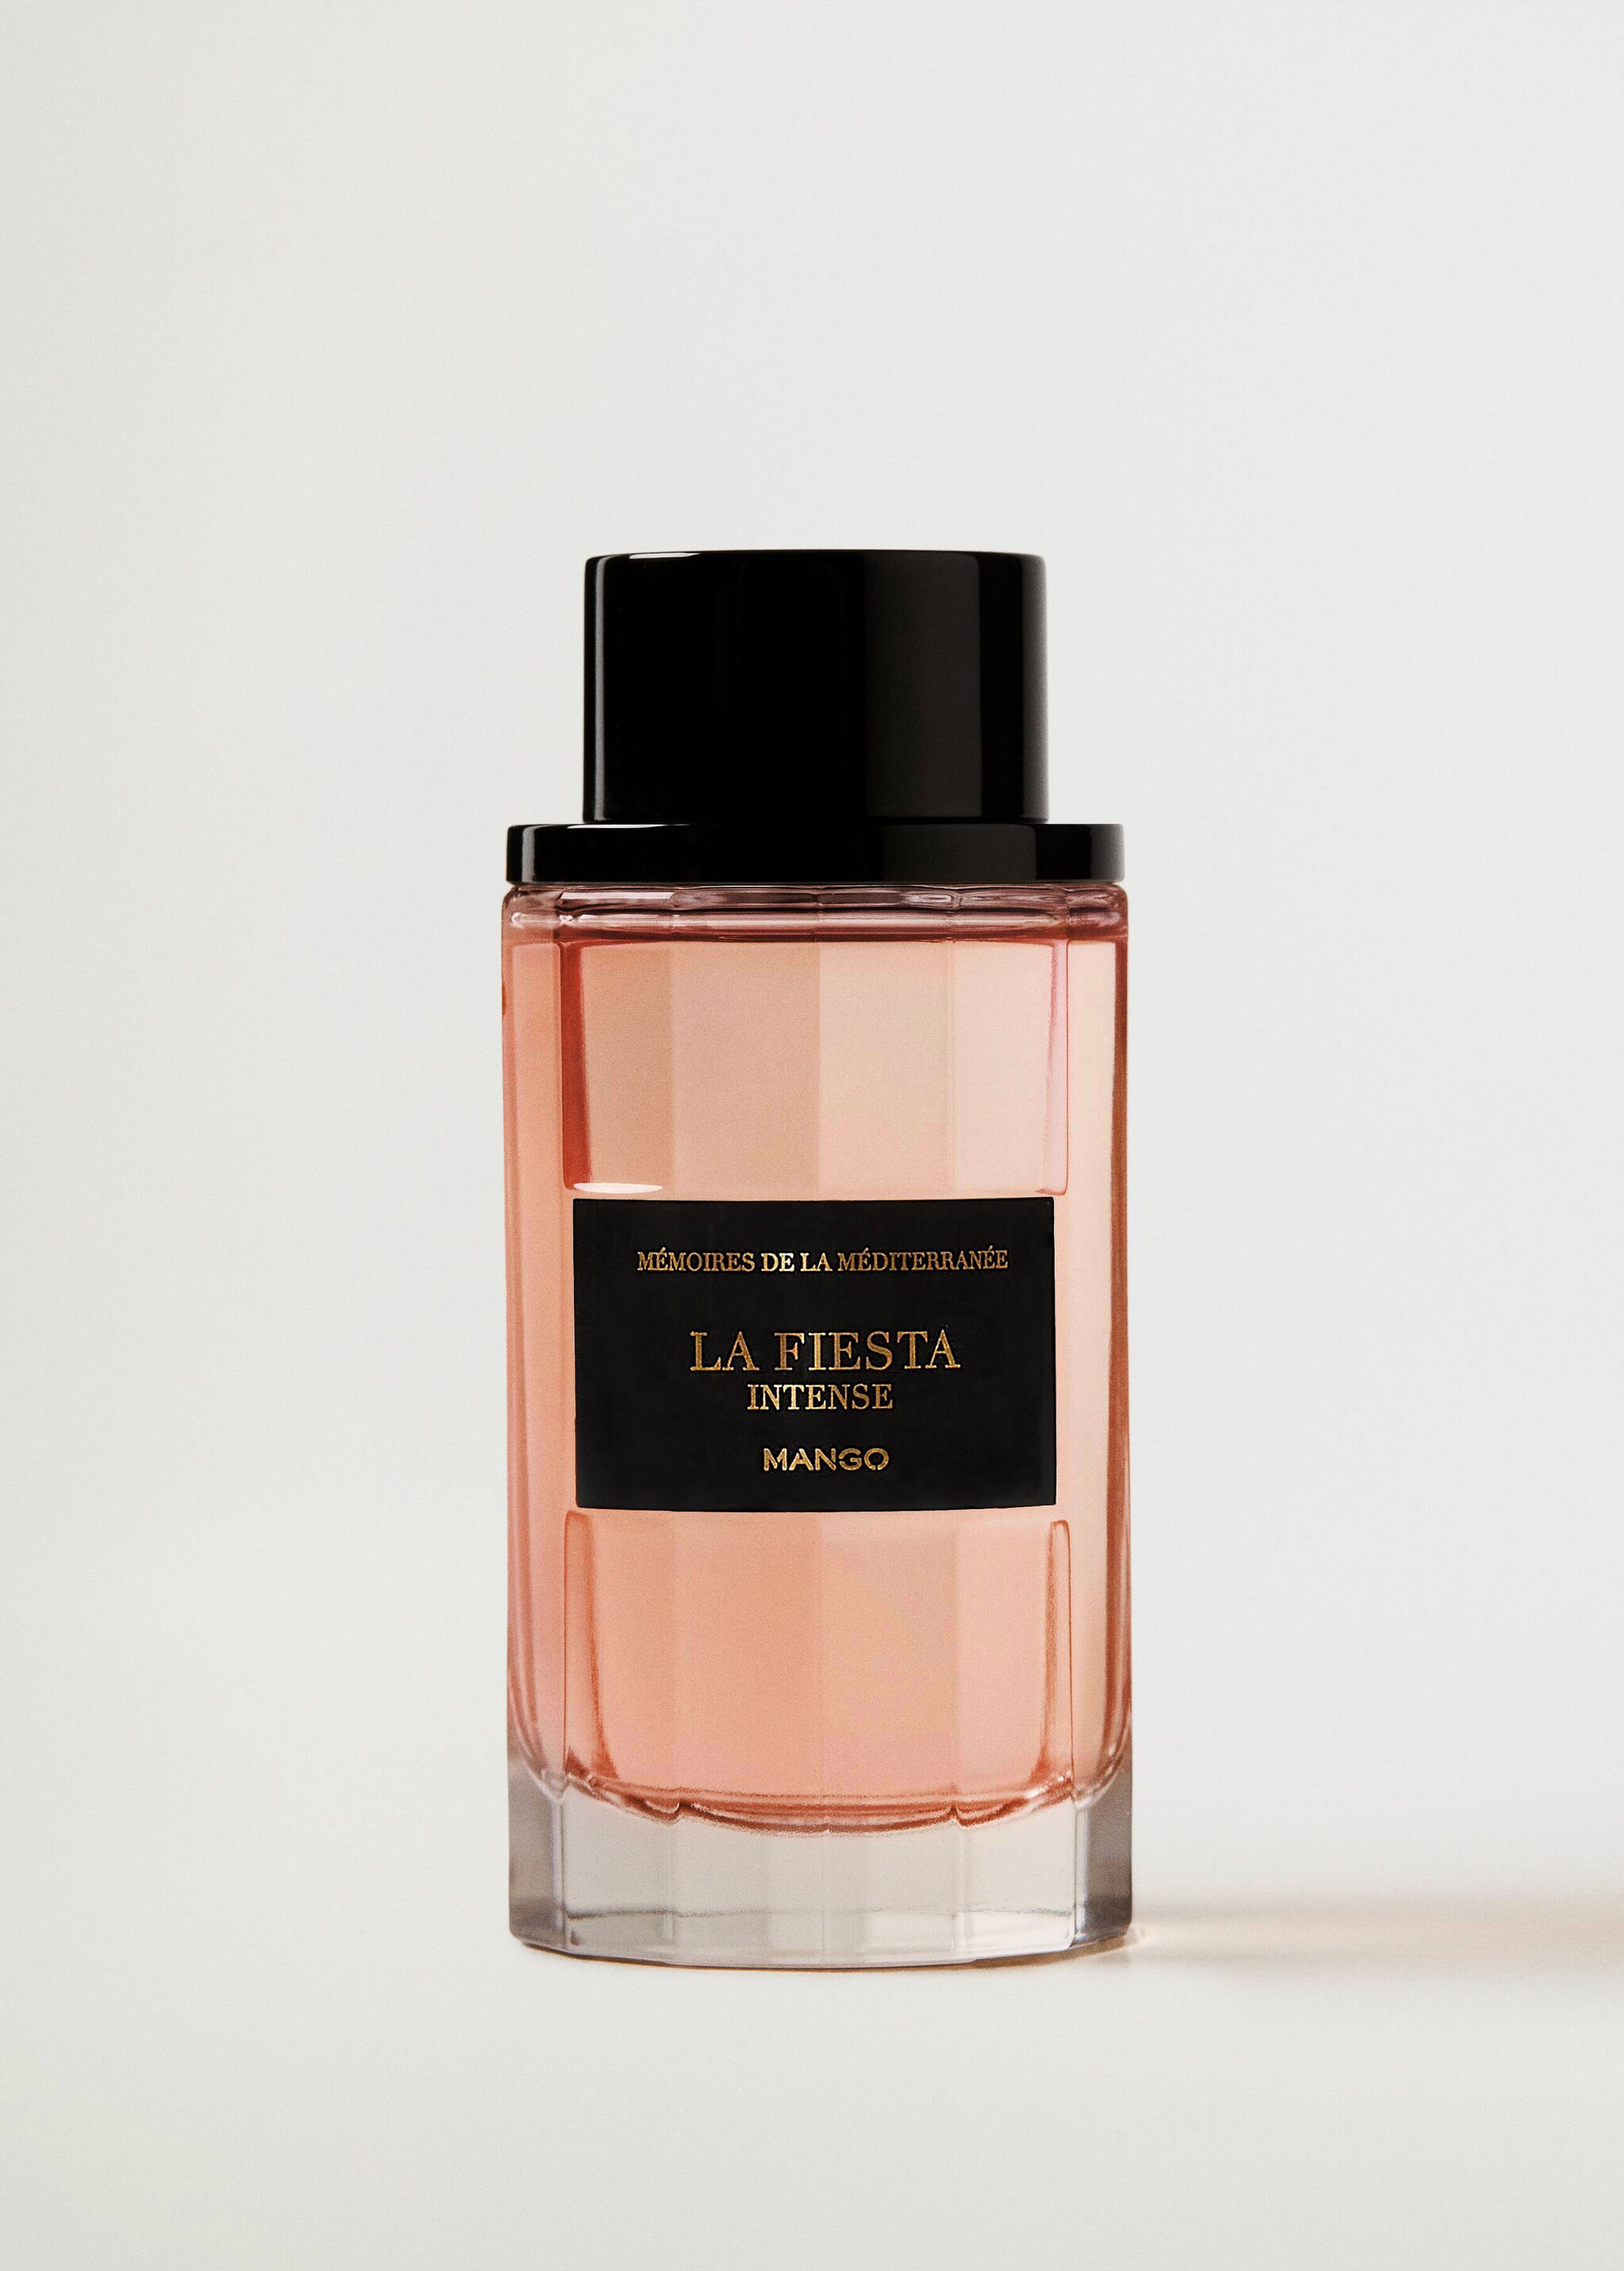 La Fiesta intense fragrance 100 ml - Article without model